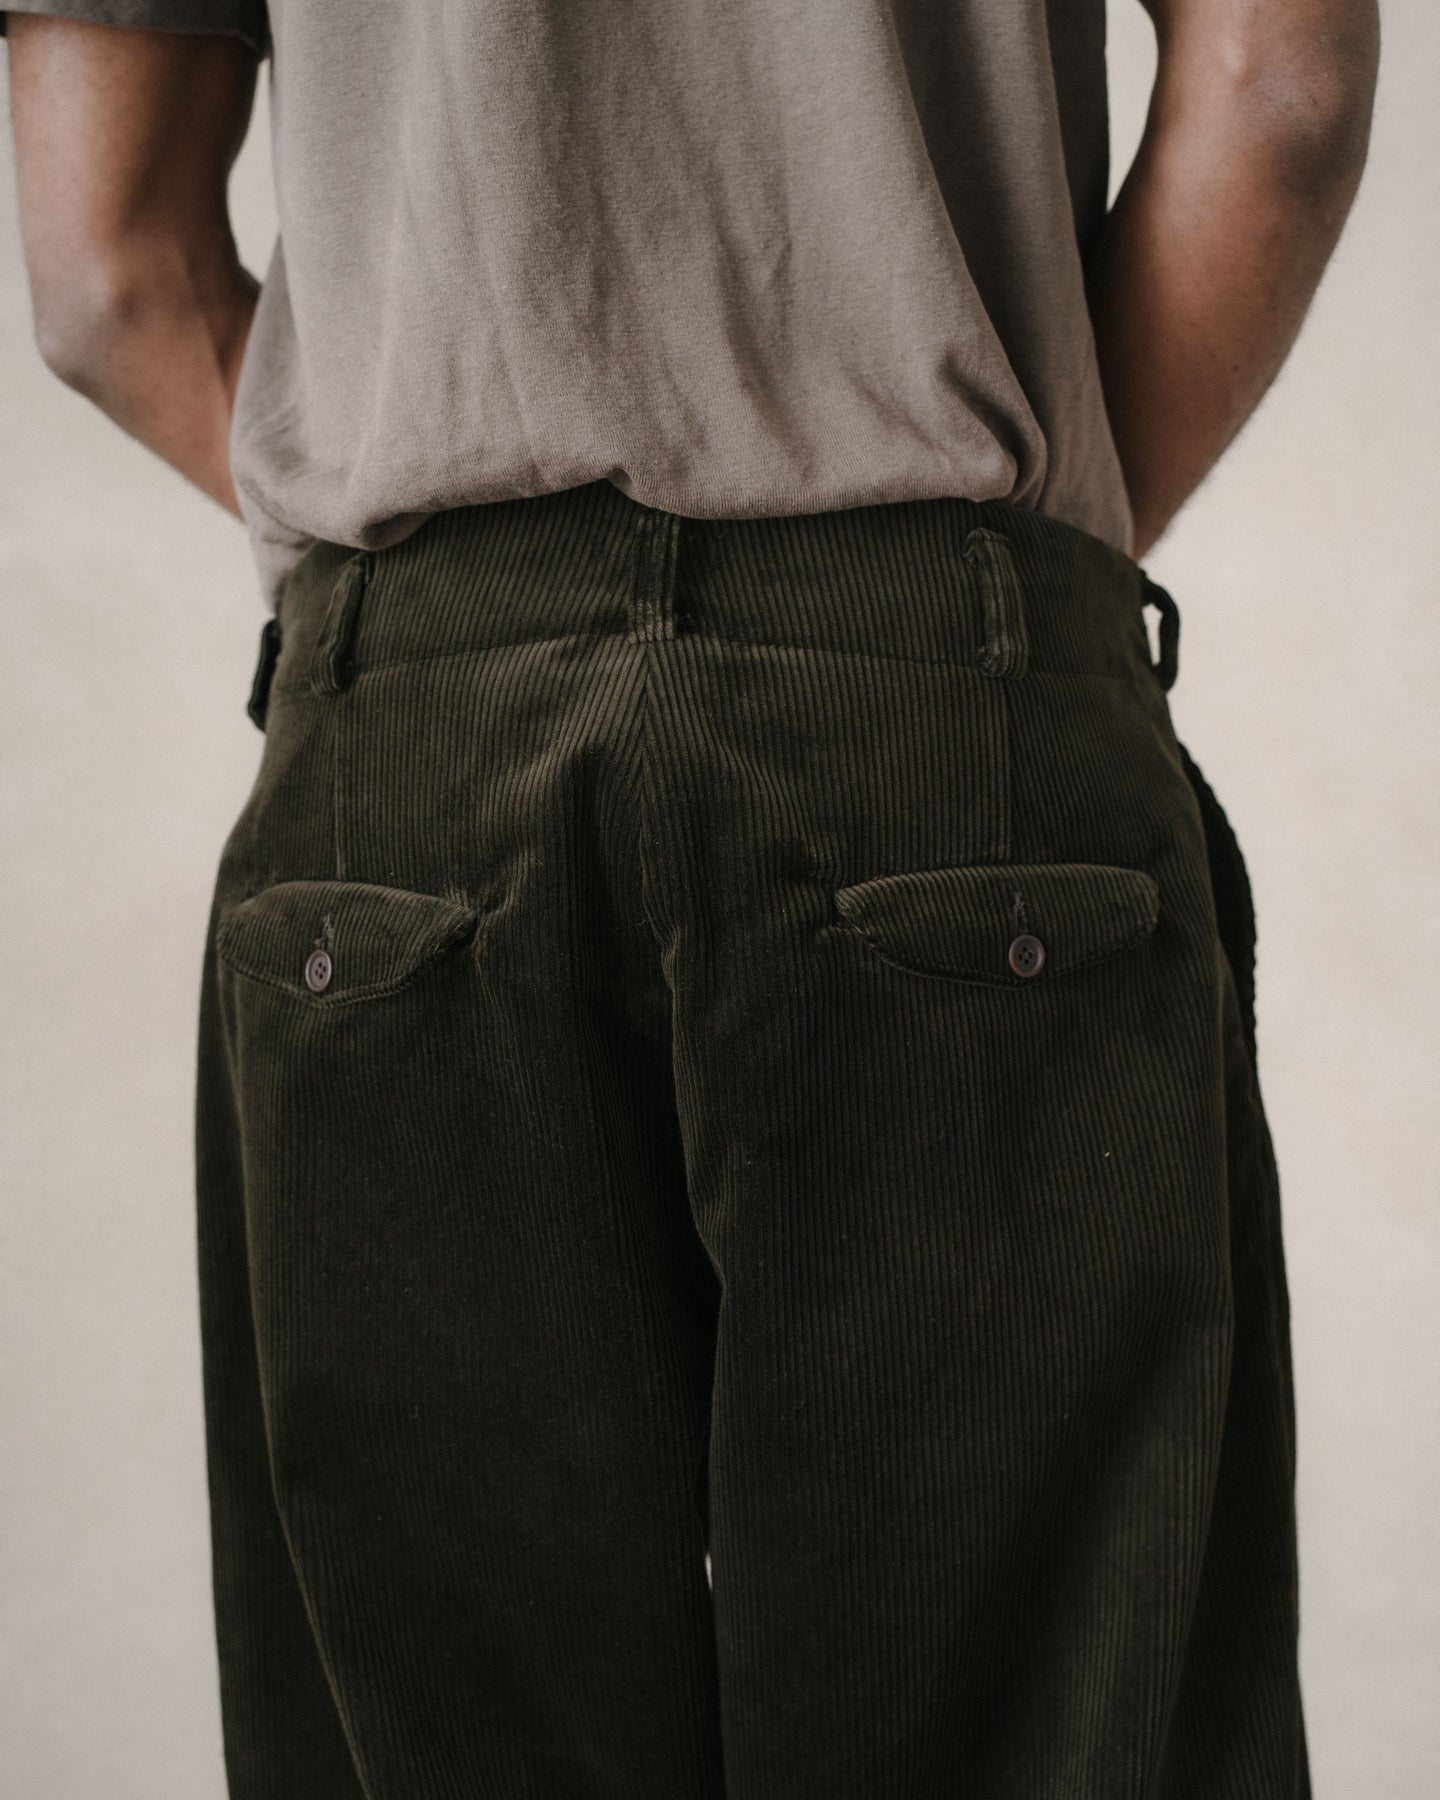 Neon Green Corduroy Pants  Xiumin - EXO - Fashion Chingu